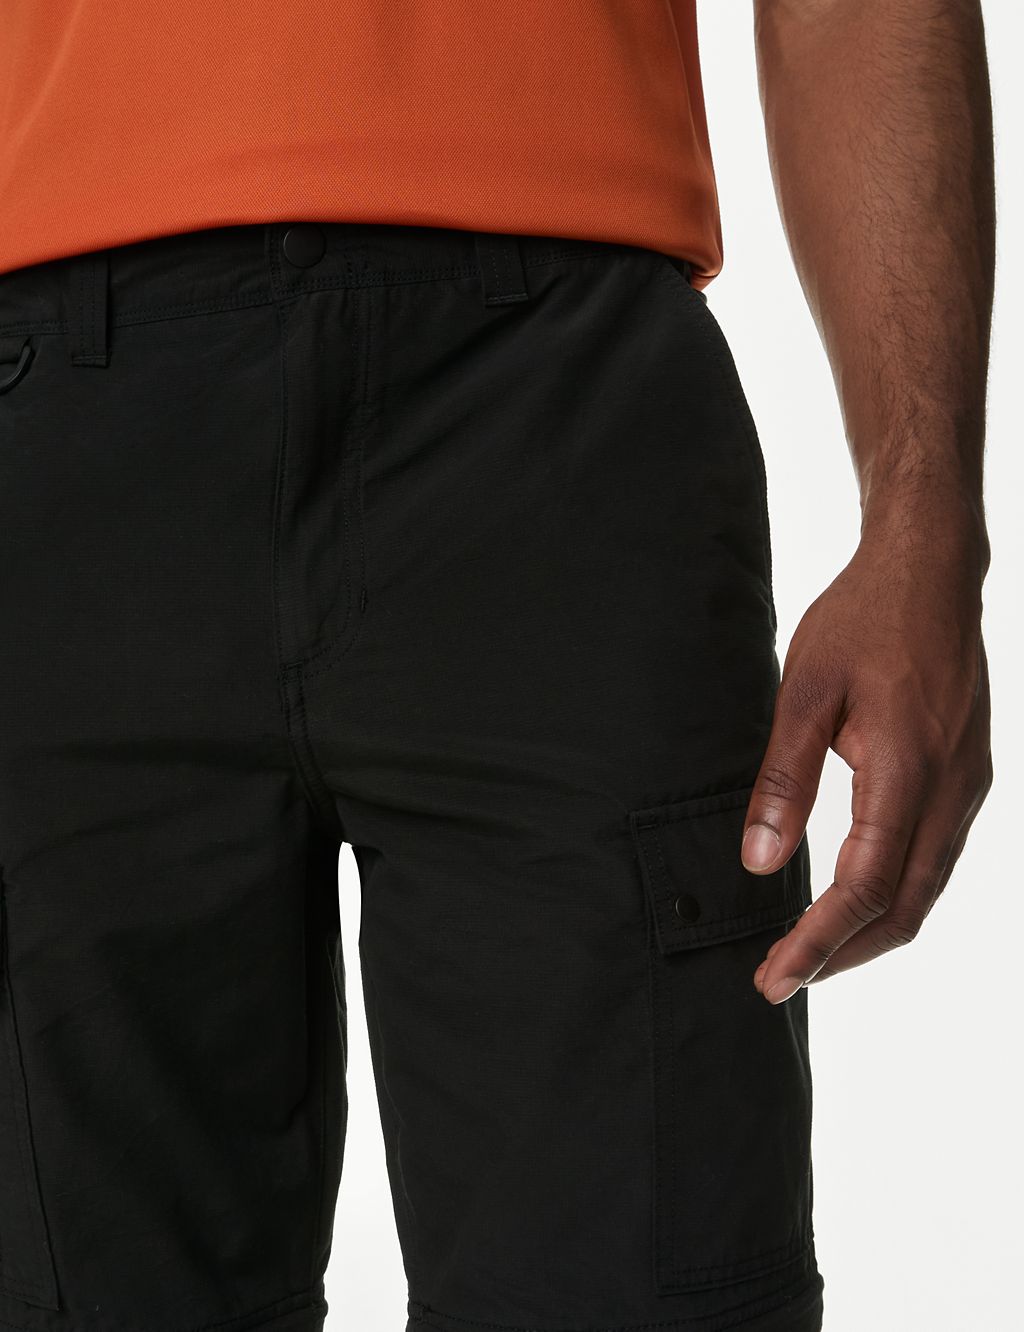 Zip Off Trekking Trousers with Stormwear™ 7 of 8